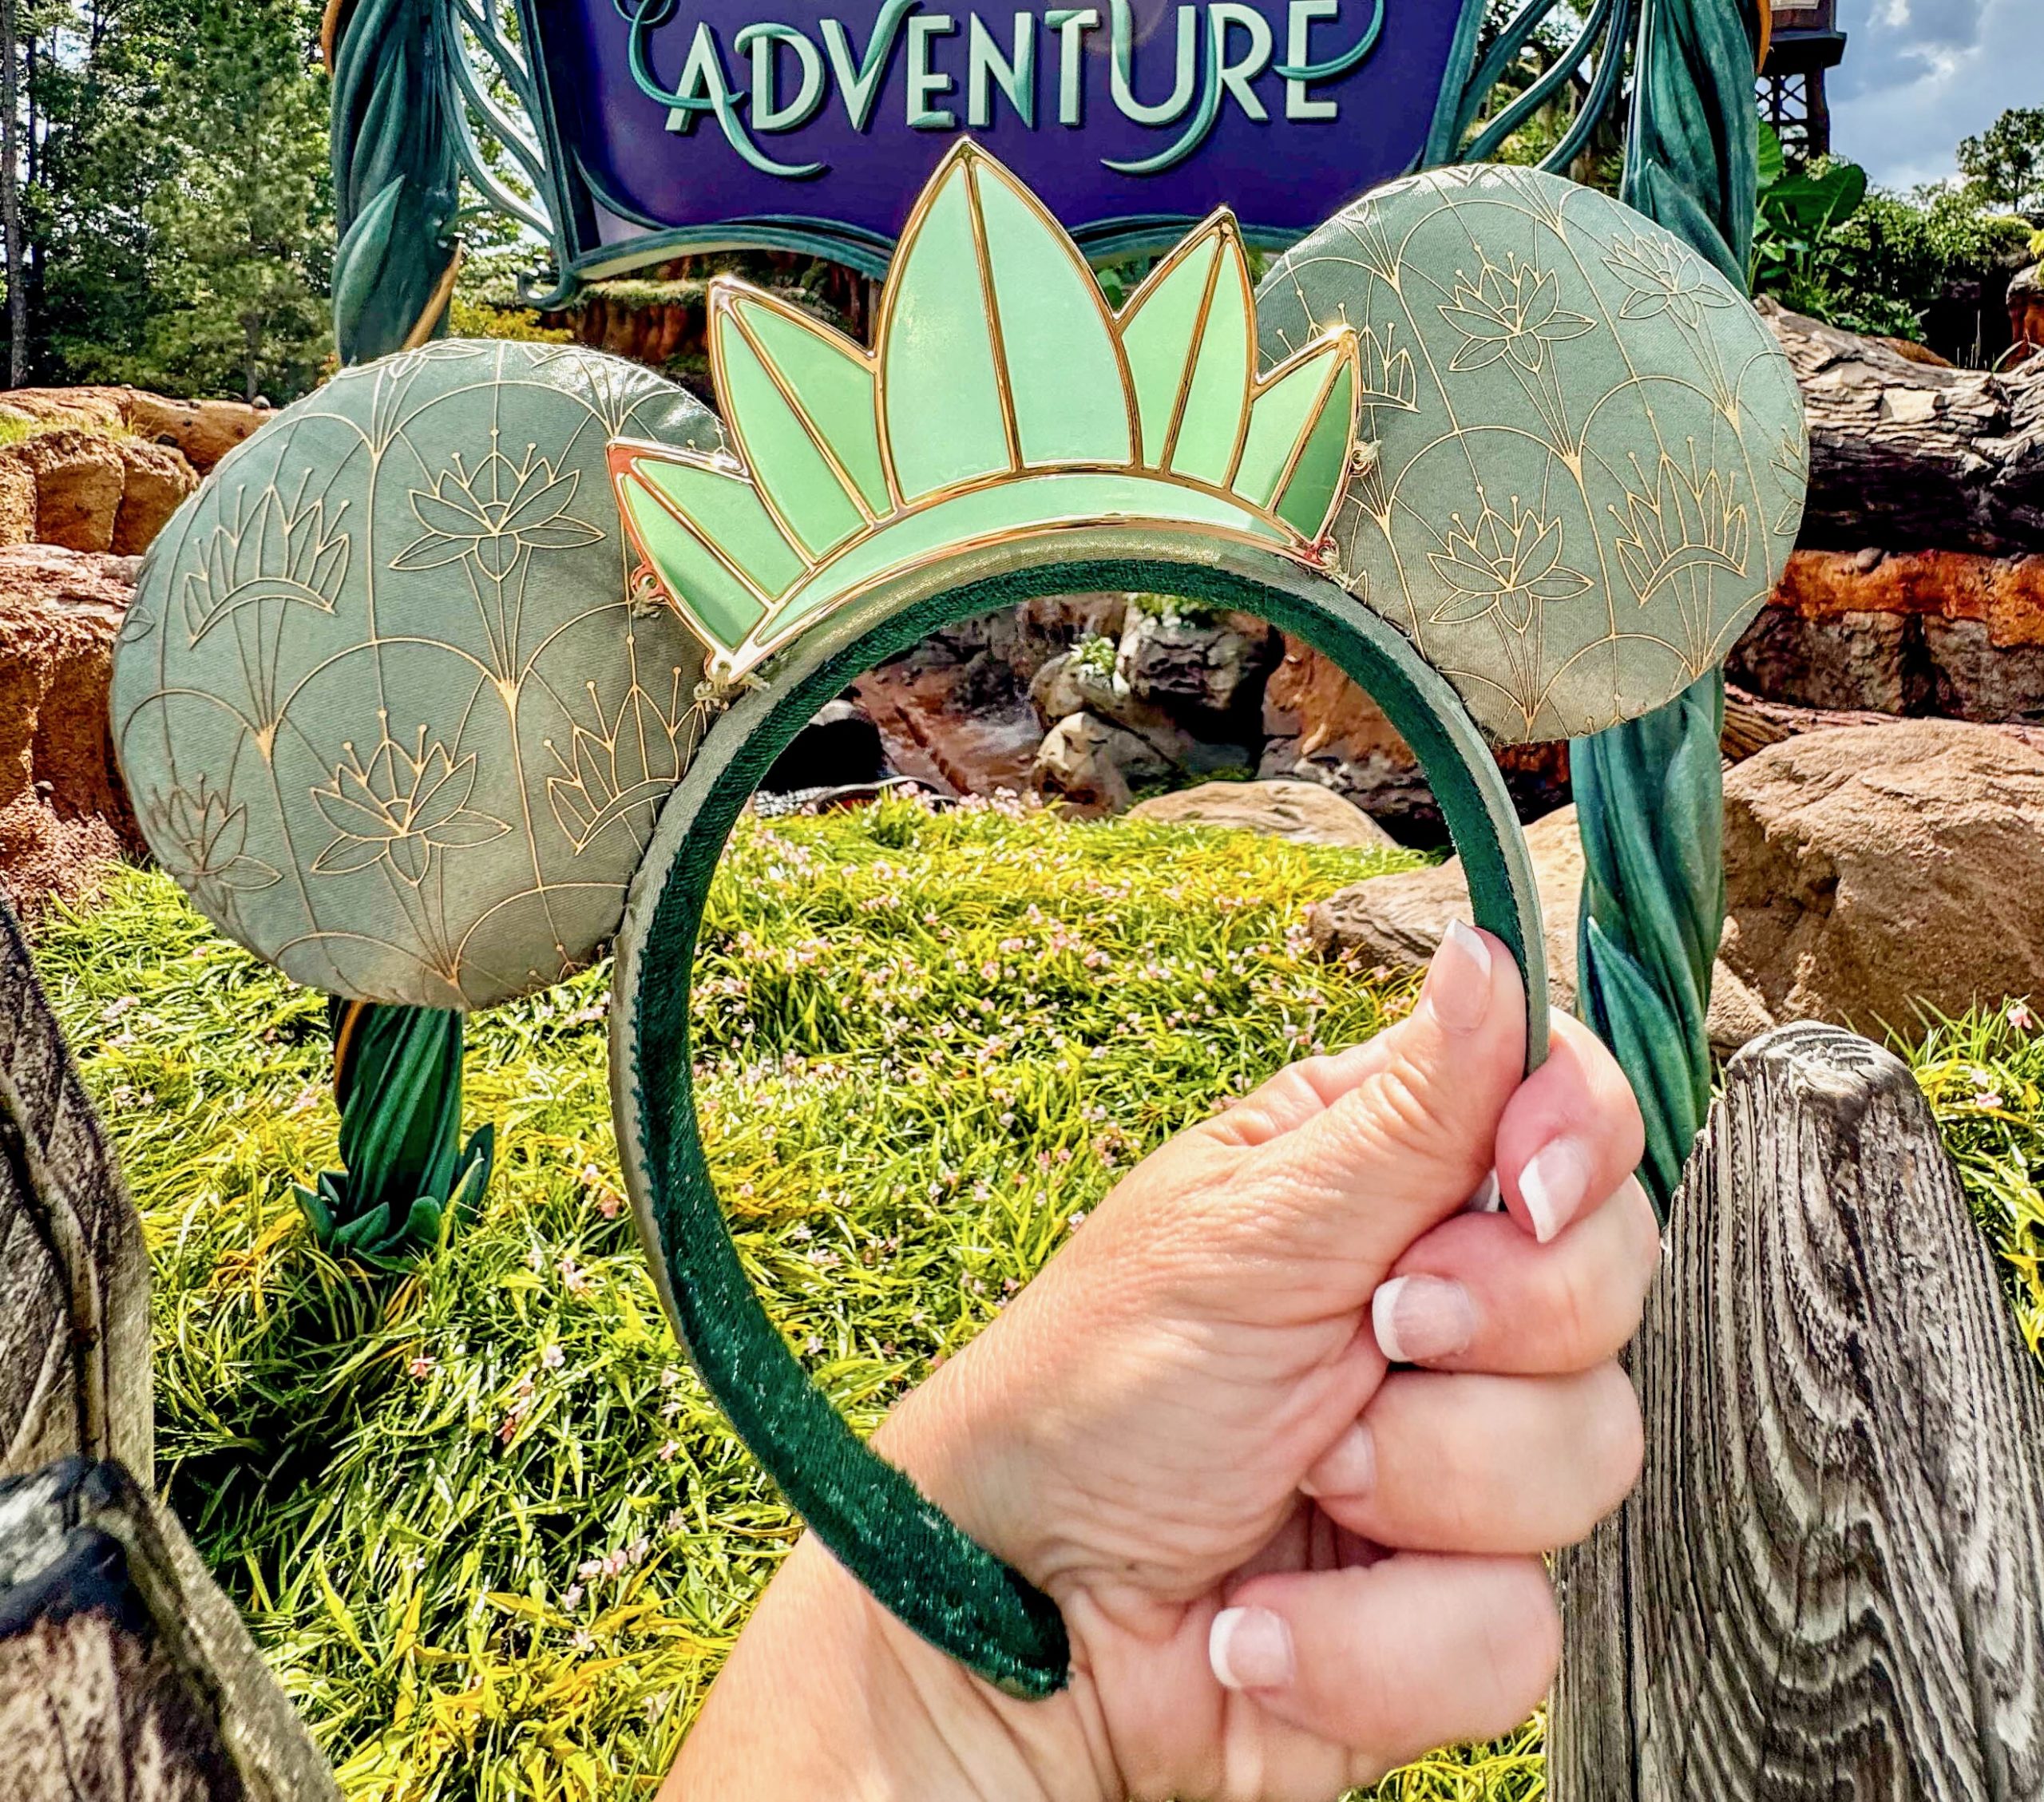 Tiana's Bayou Adventure Minnie Ears in Magic Kingdom